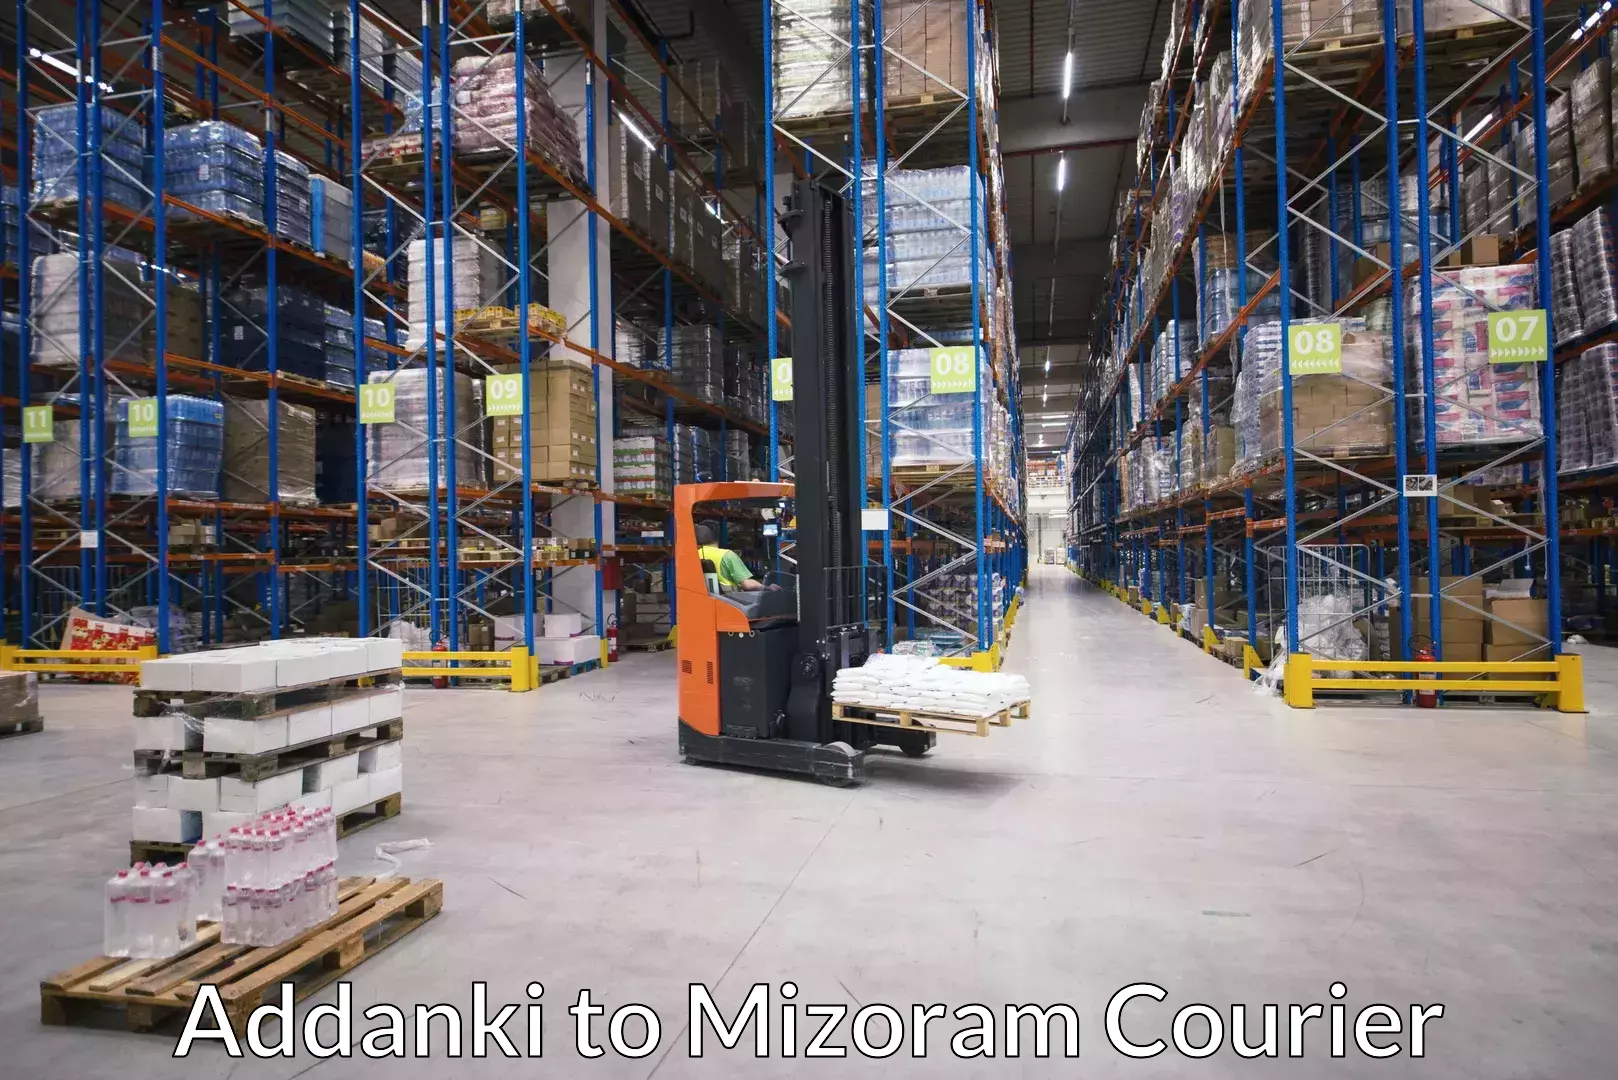 Moving and packing experts Addanki to Mizoram